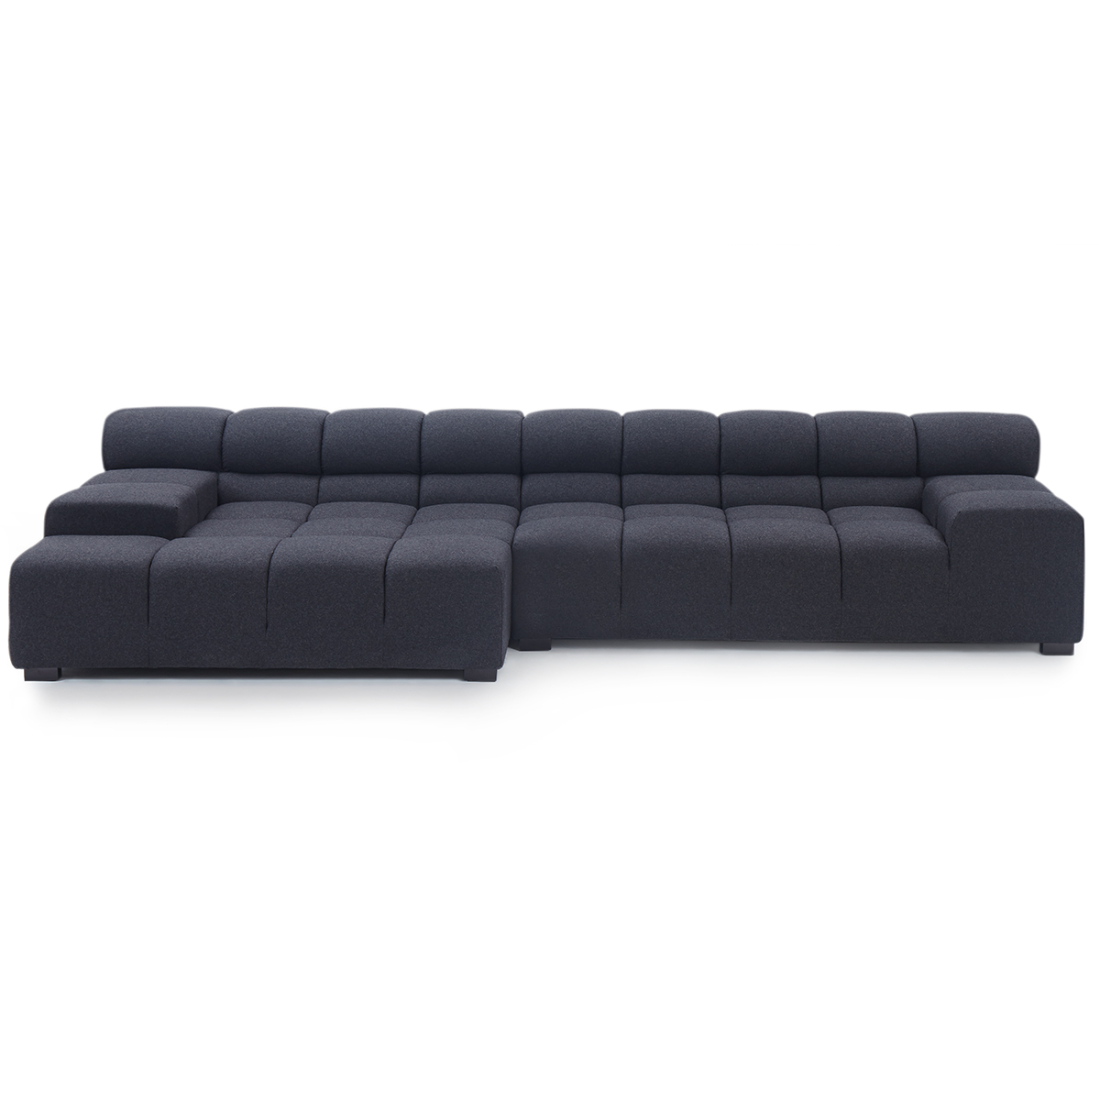 Tufty Sofa | Sectional 010
